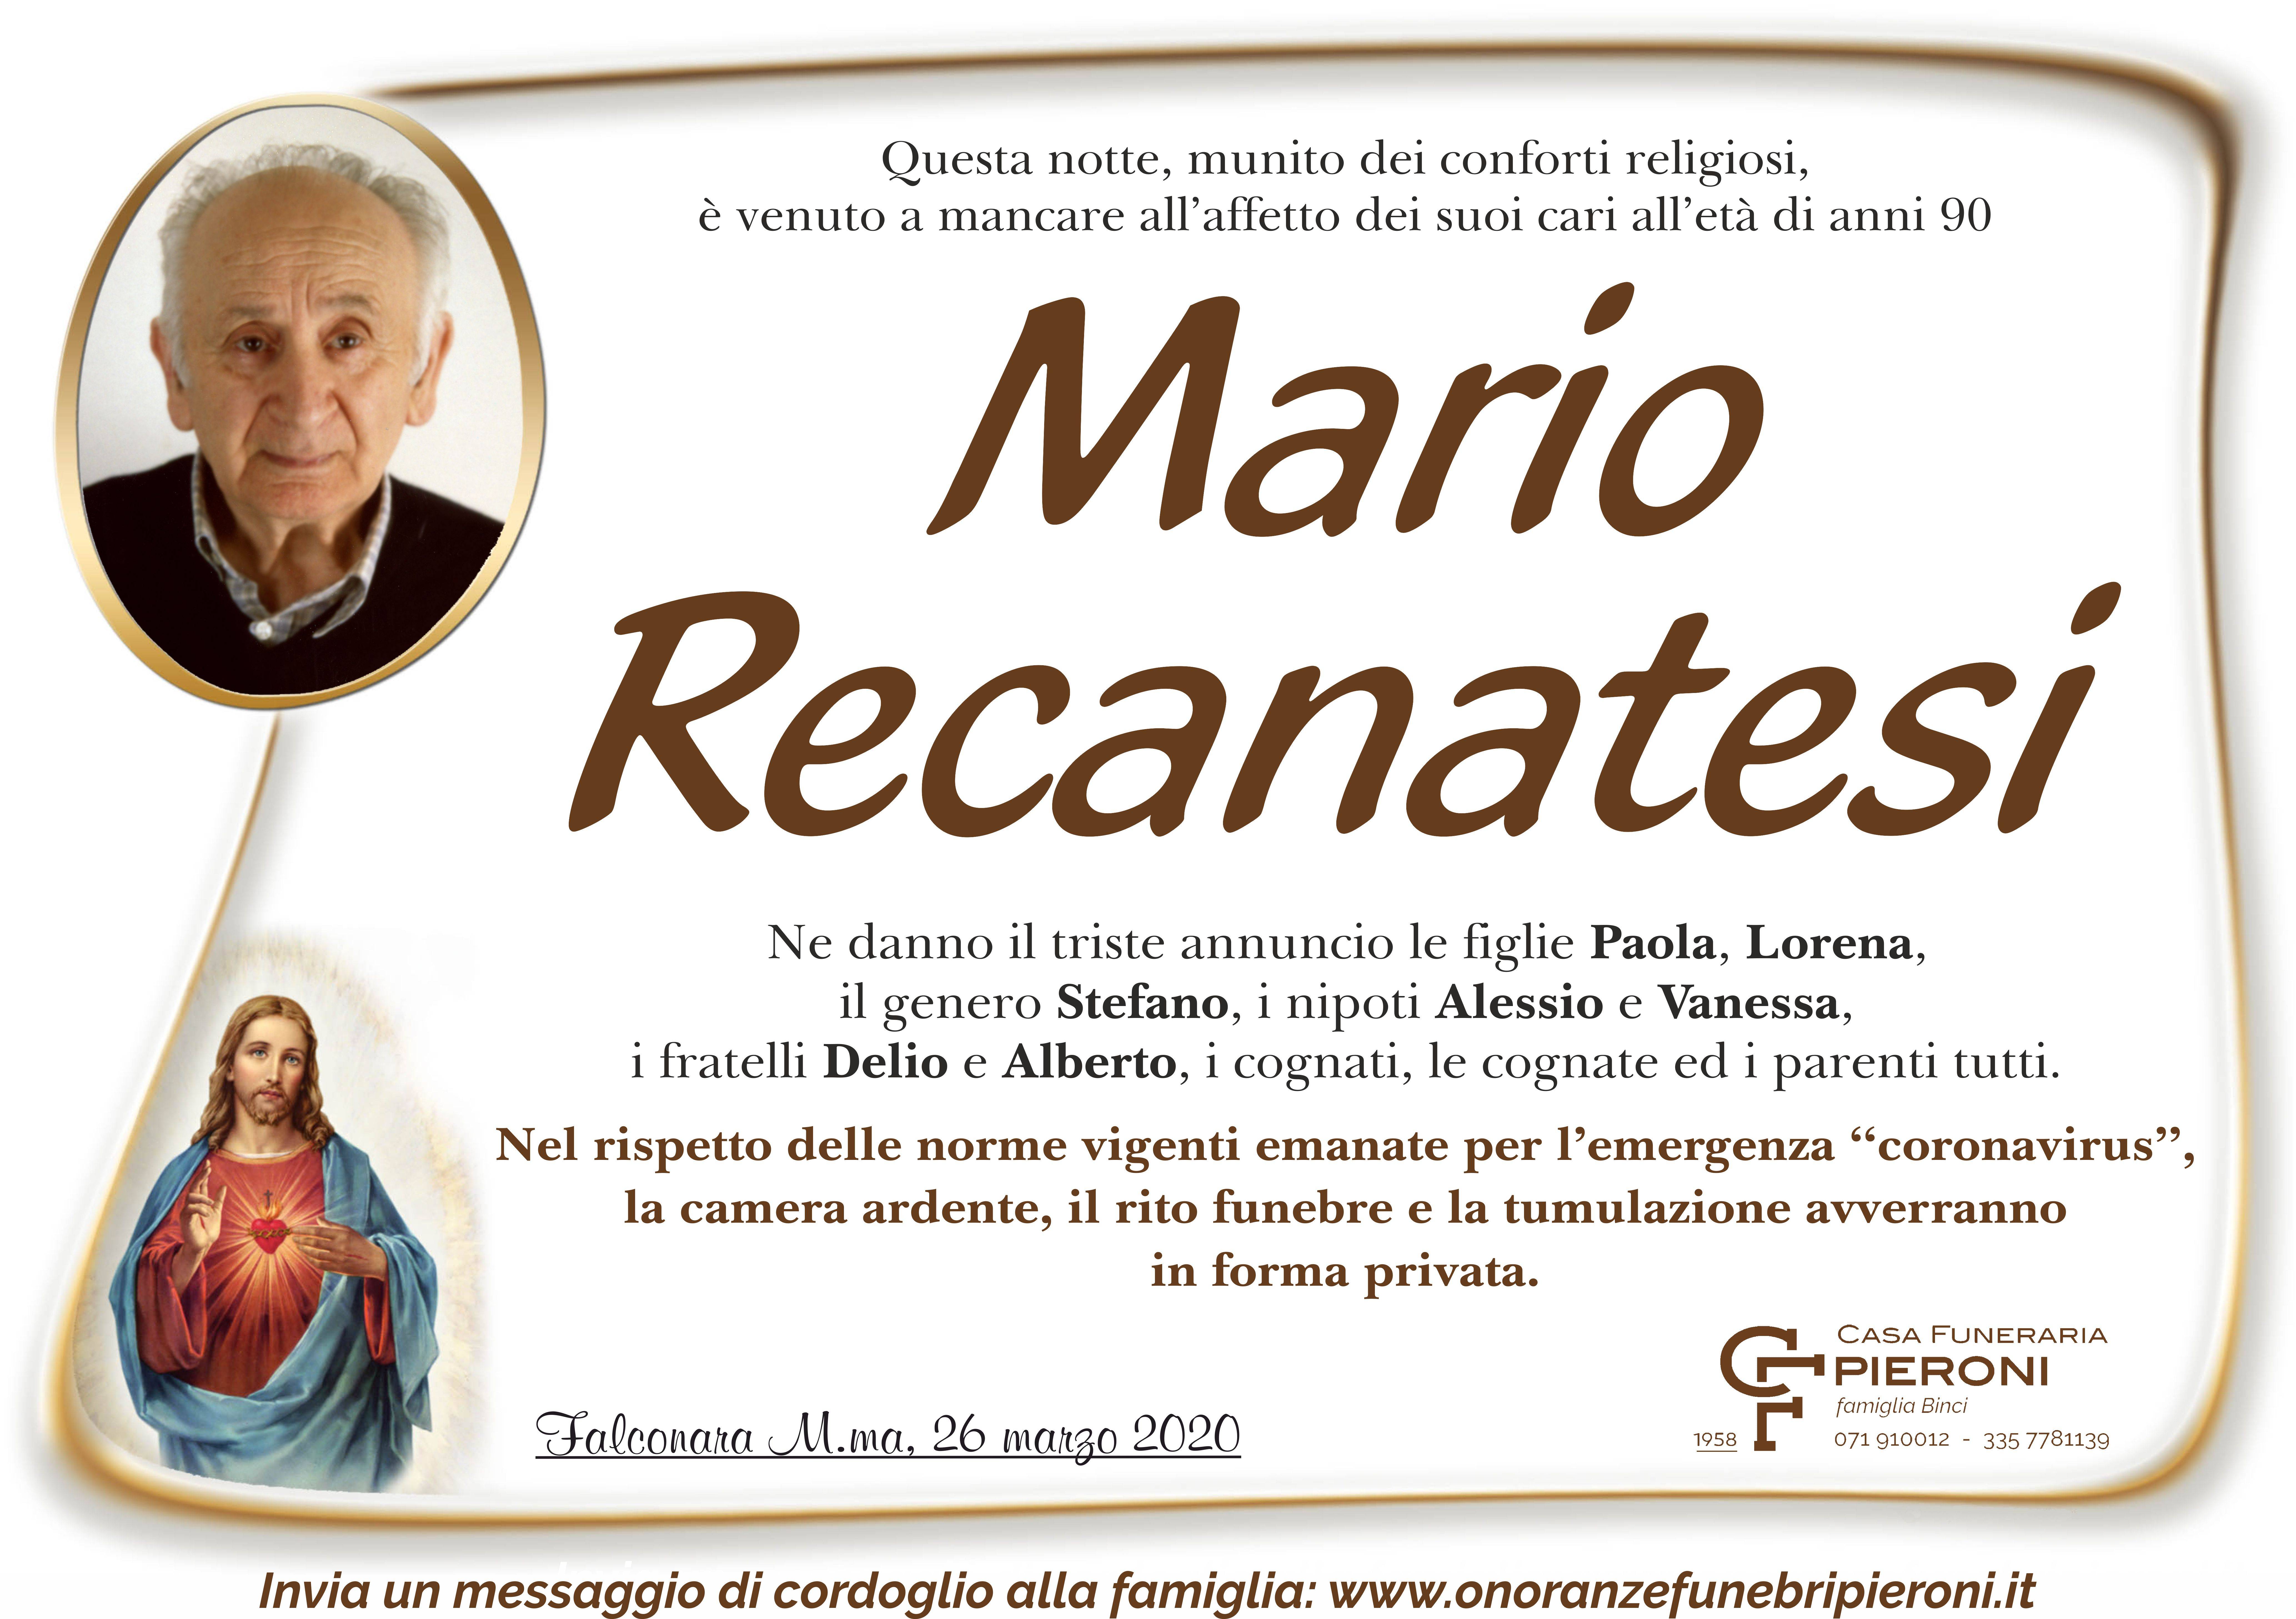 Mario Recanatesi